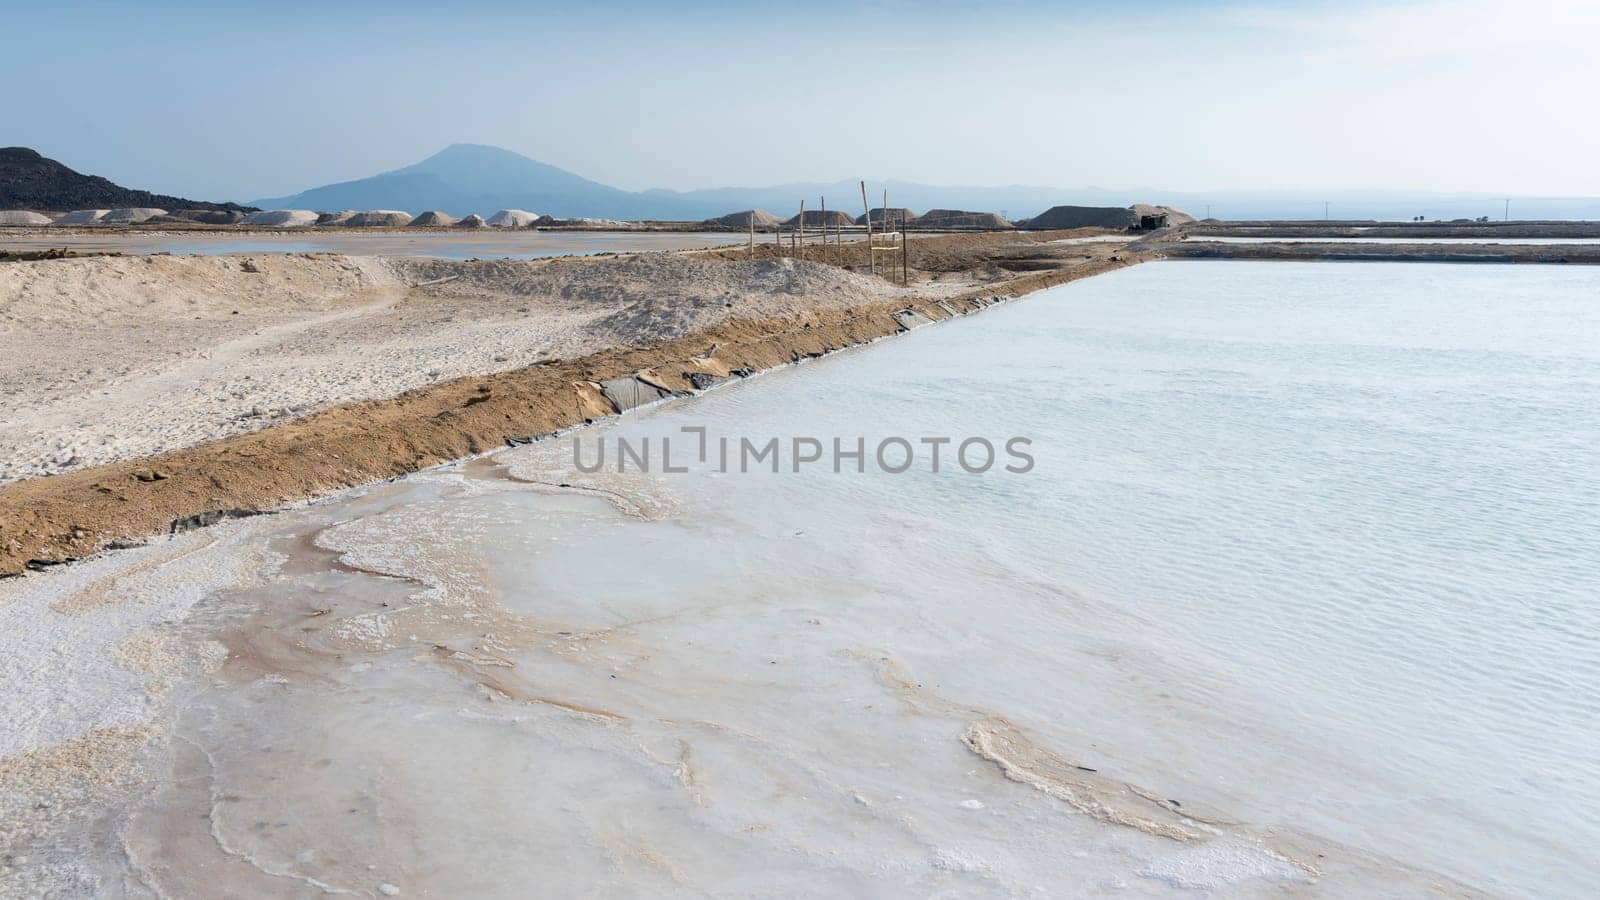 Salt flats near Afrera Lake in the Danakil Depression in Ethiopia in Africa.